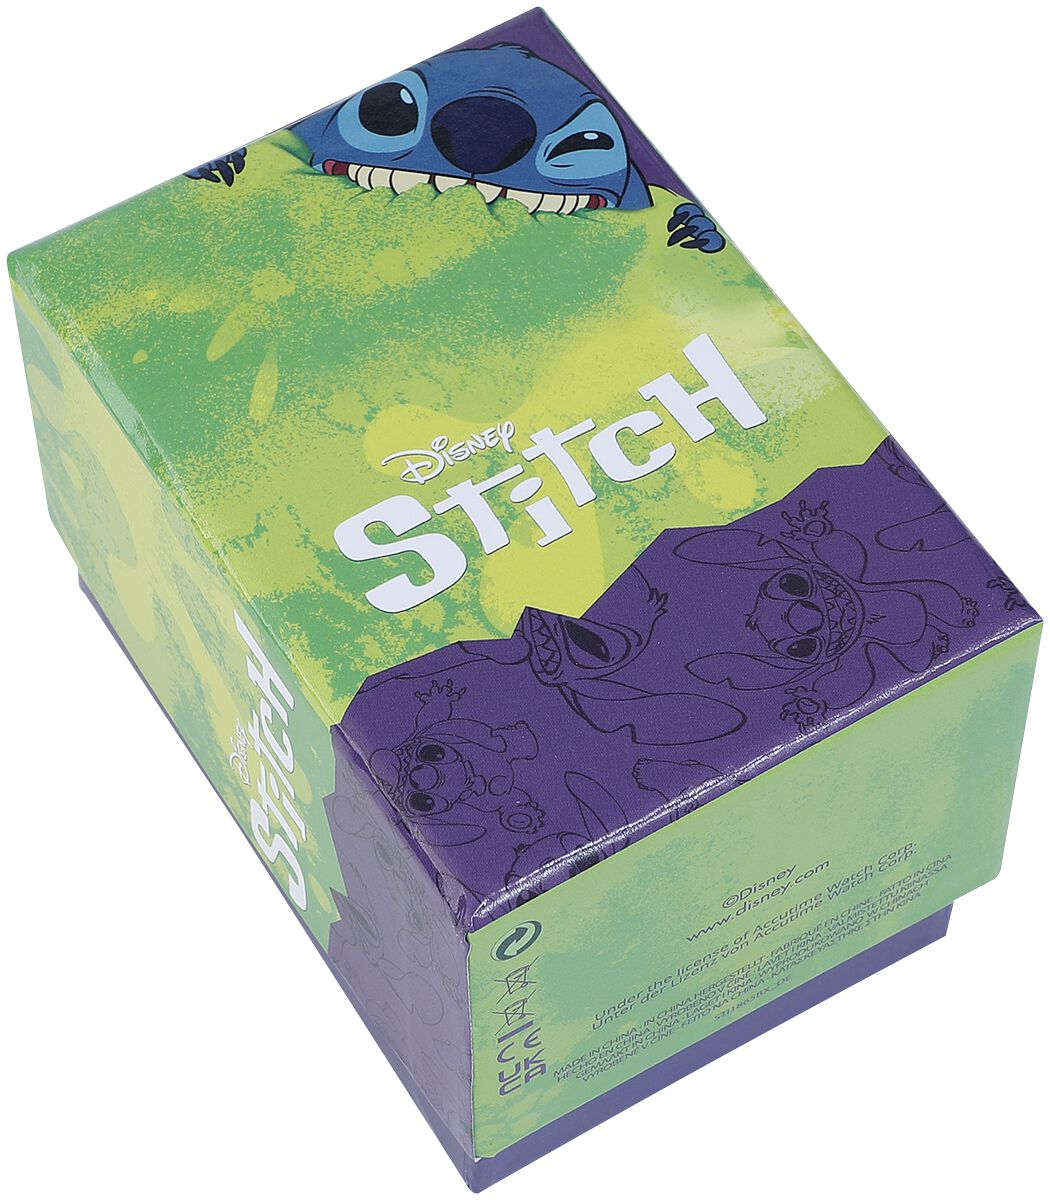 Bracelet Disney - Stitch au meilleur prix